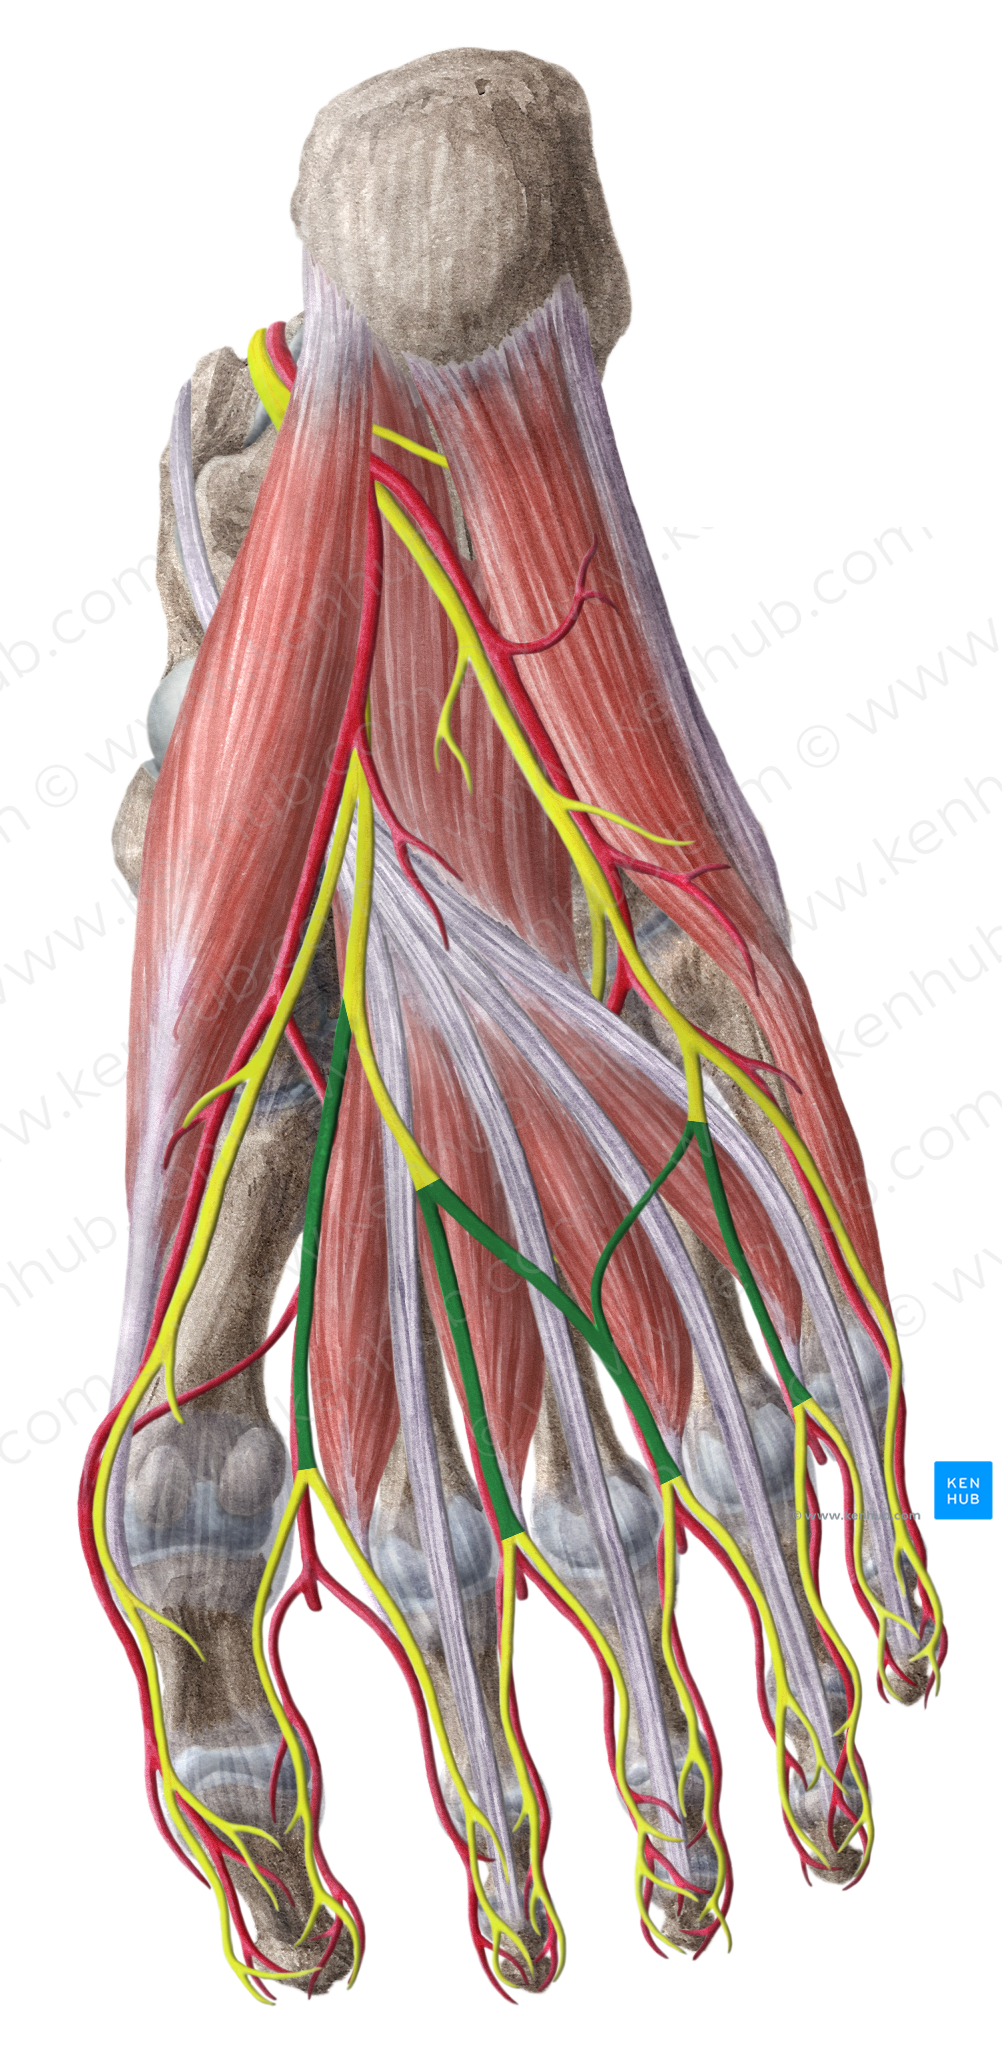 Common plantar digital nerves (#6225)